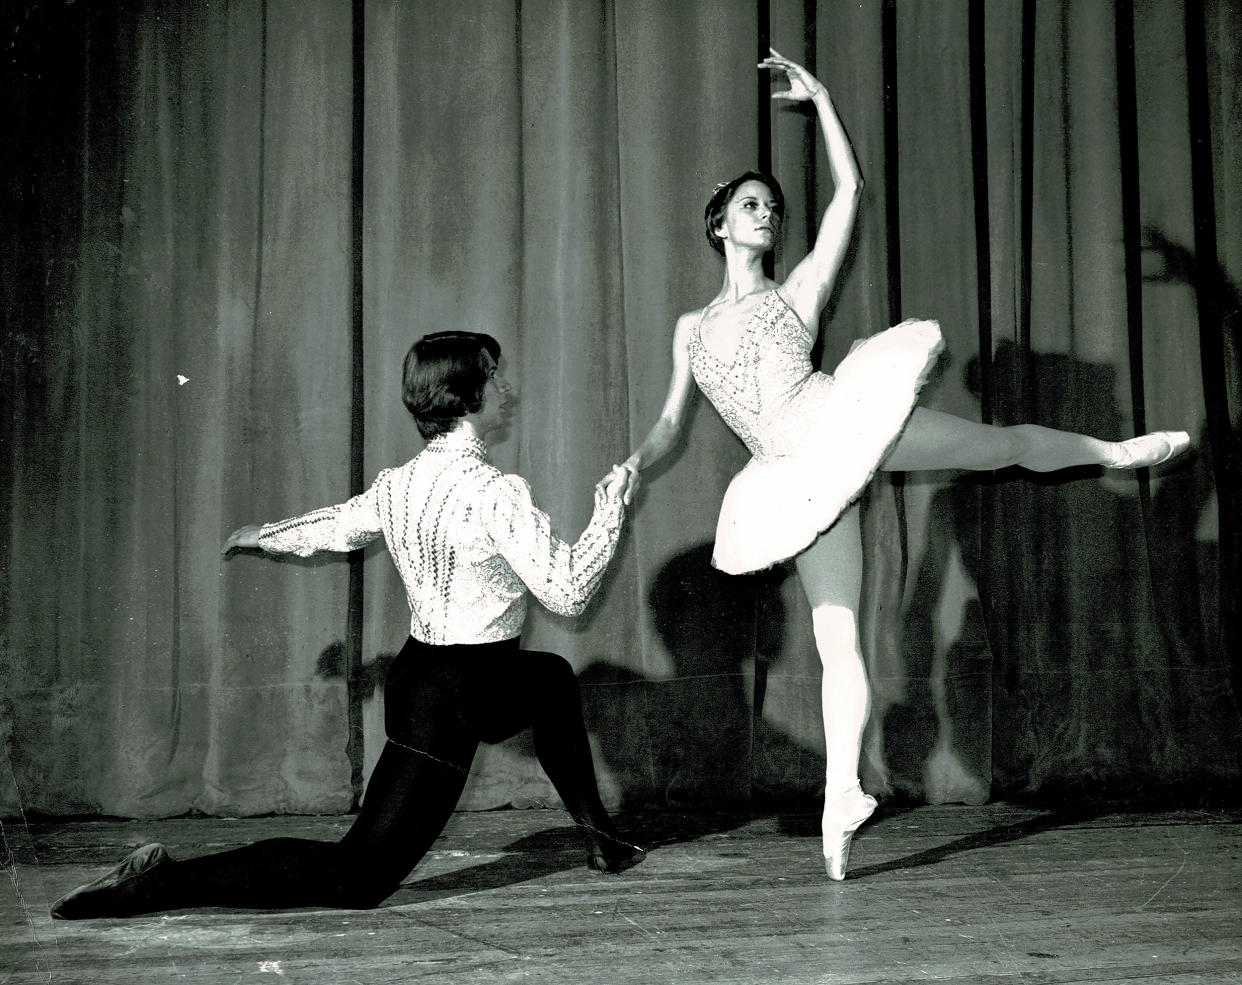 In her 20s, Martin was a professional ballerina. (Courtesy Robin Martin)